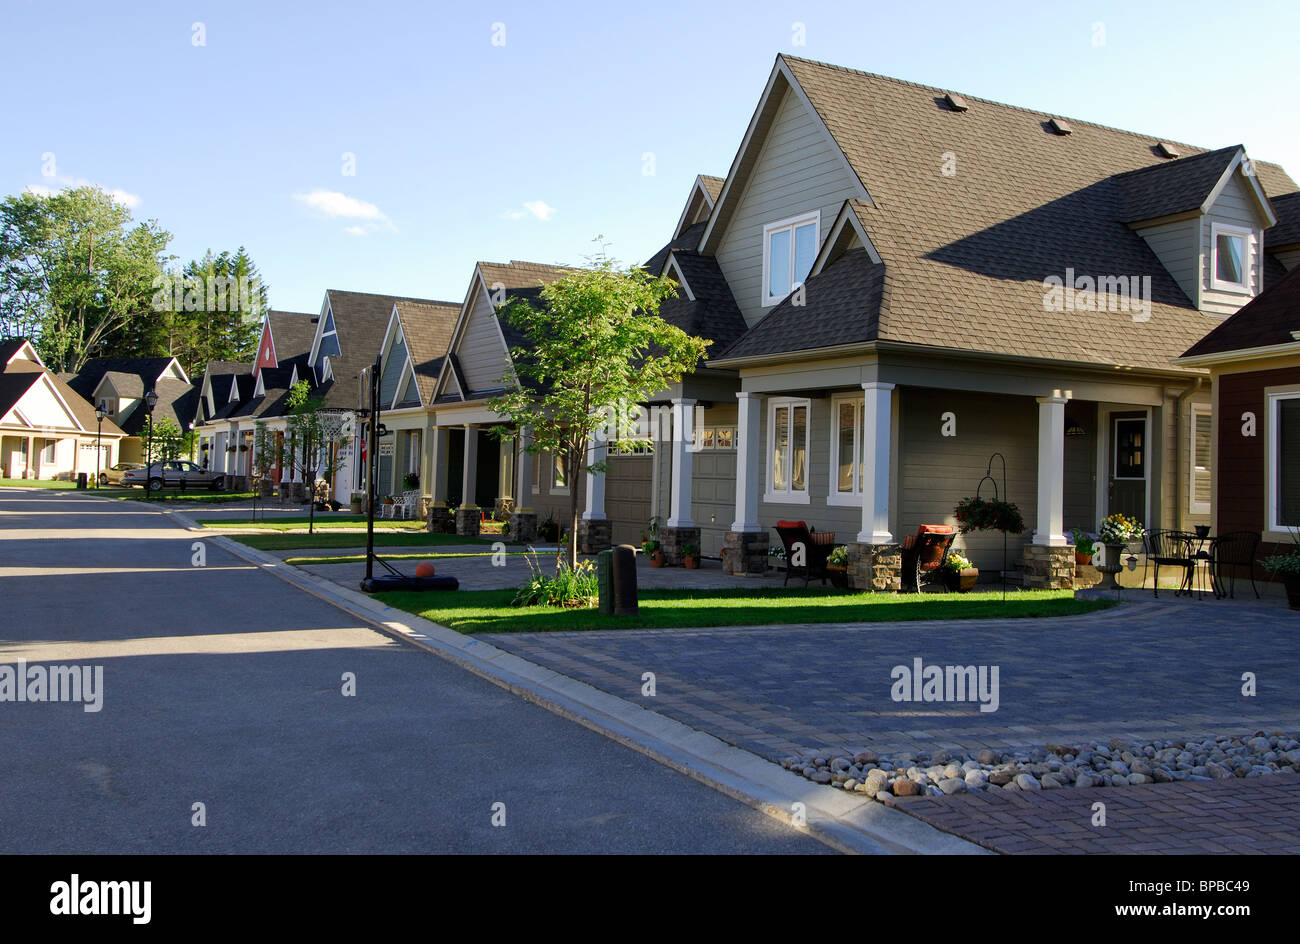 Moderne Single Family Homes in einer neuen s-Bahn-Straße In Nordamerika Stockfoto